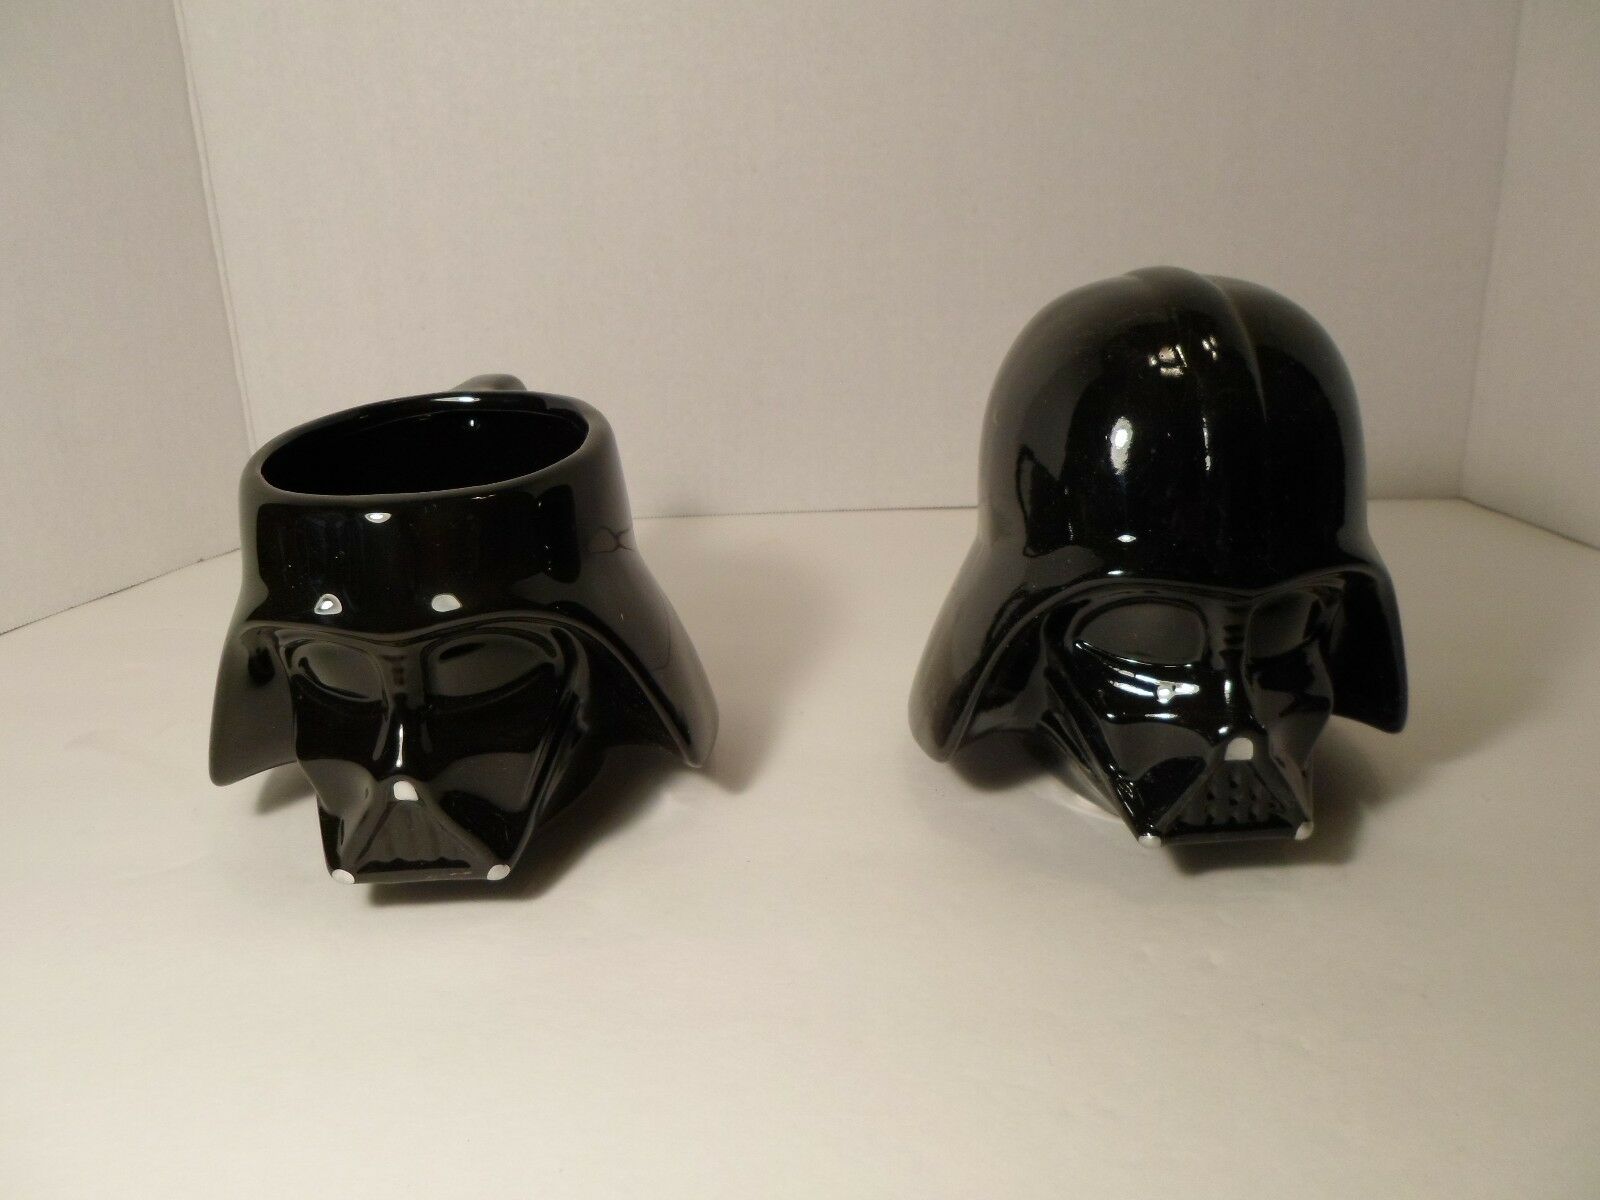 Star Wars Darth Vader & Stormtrooper Coffee Maker Set